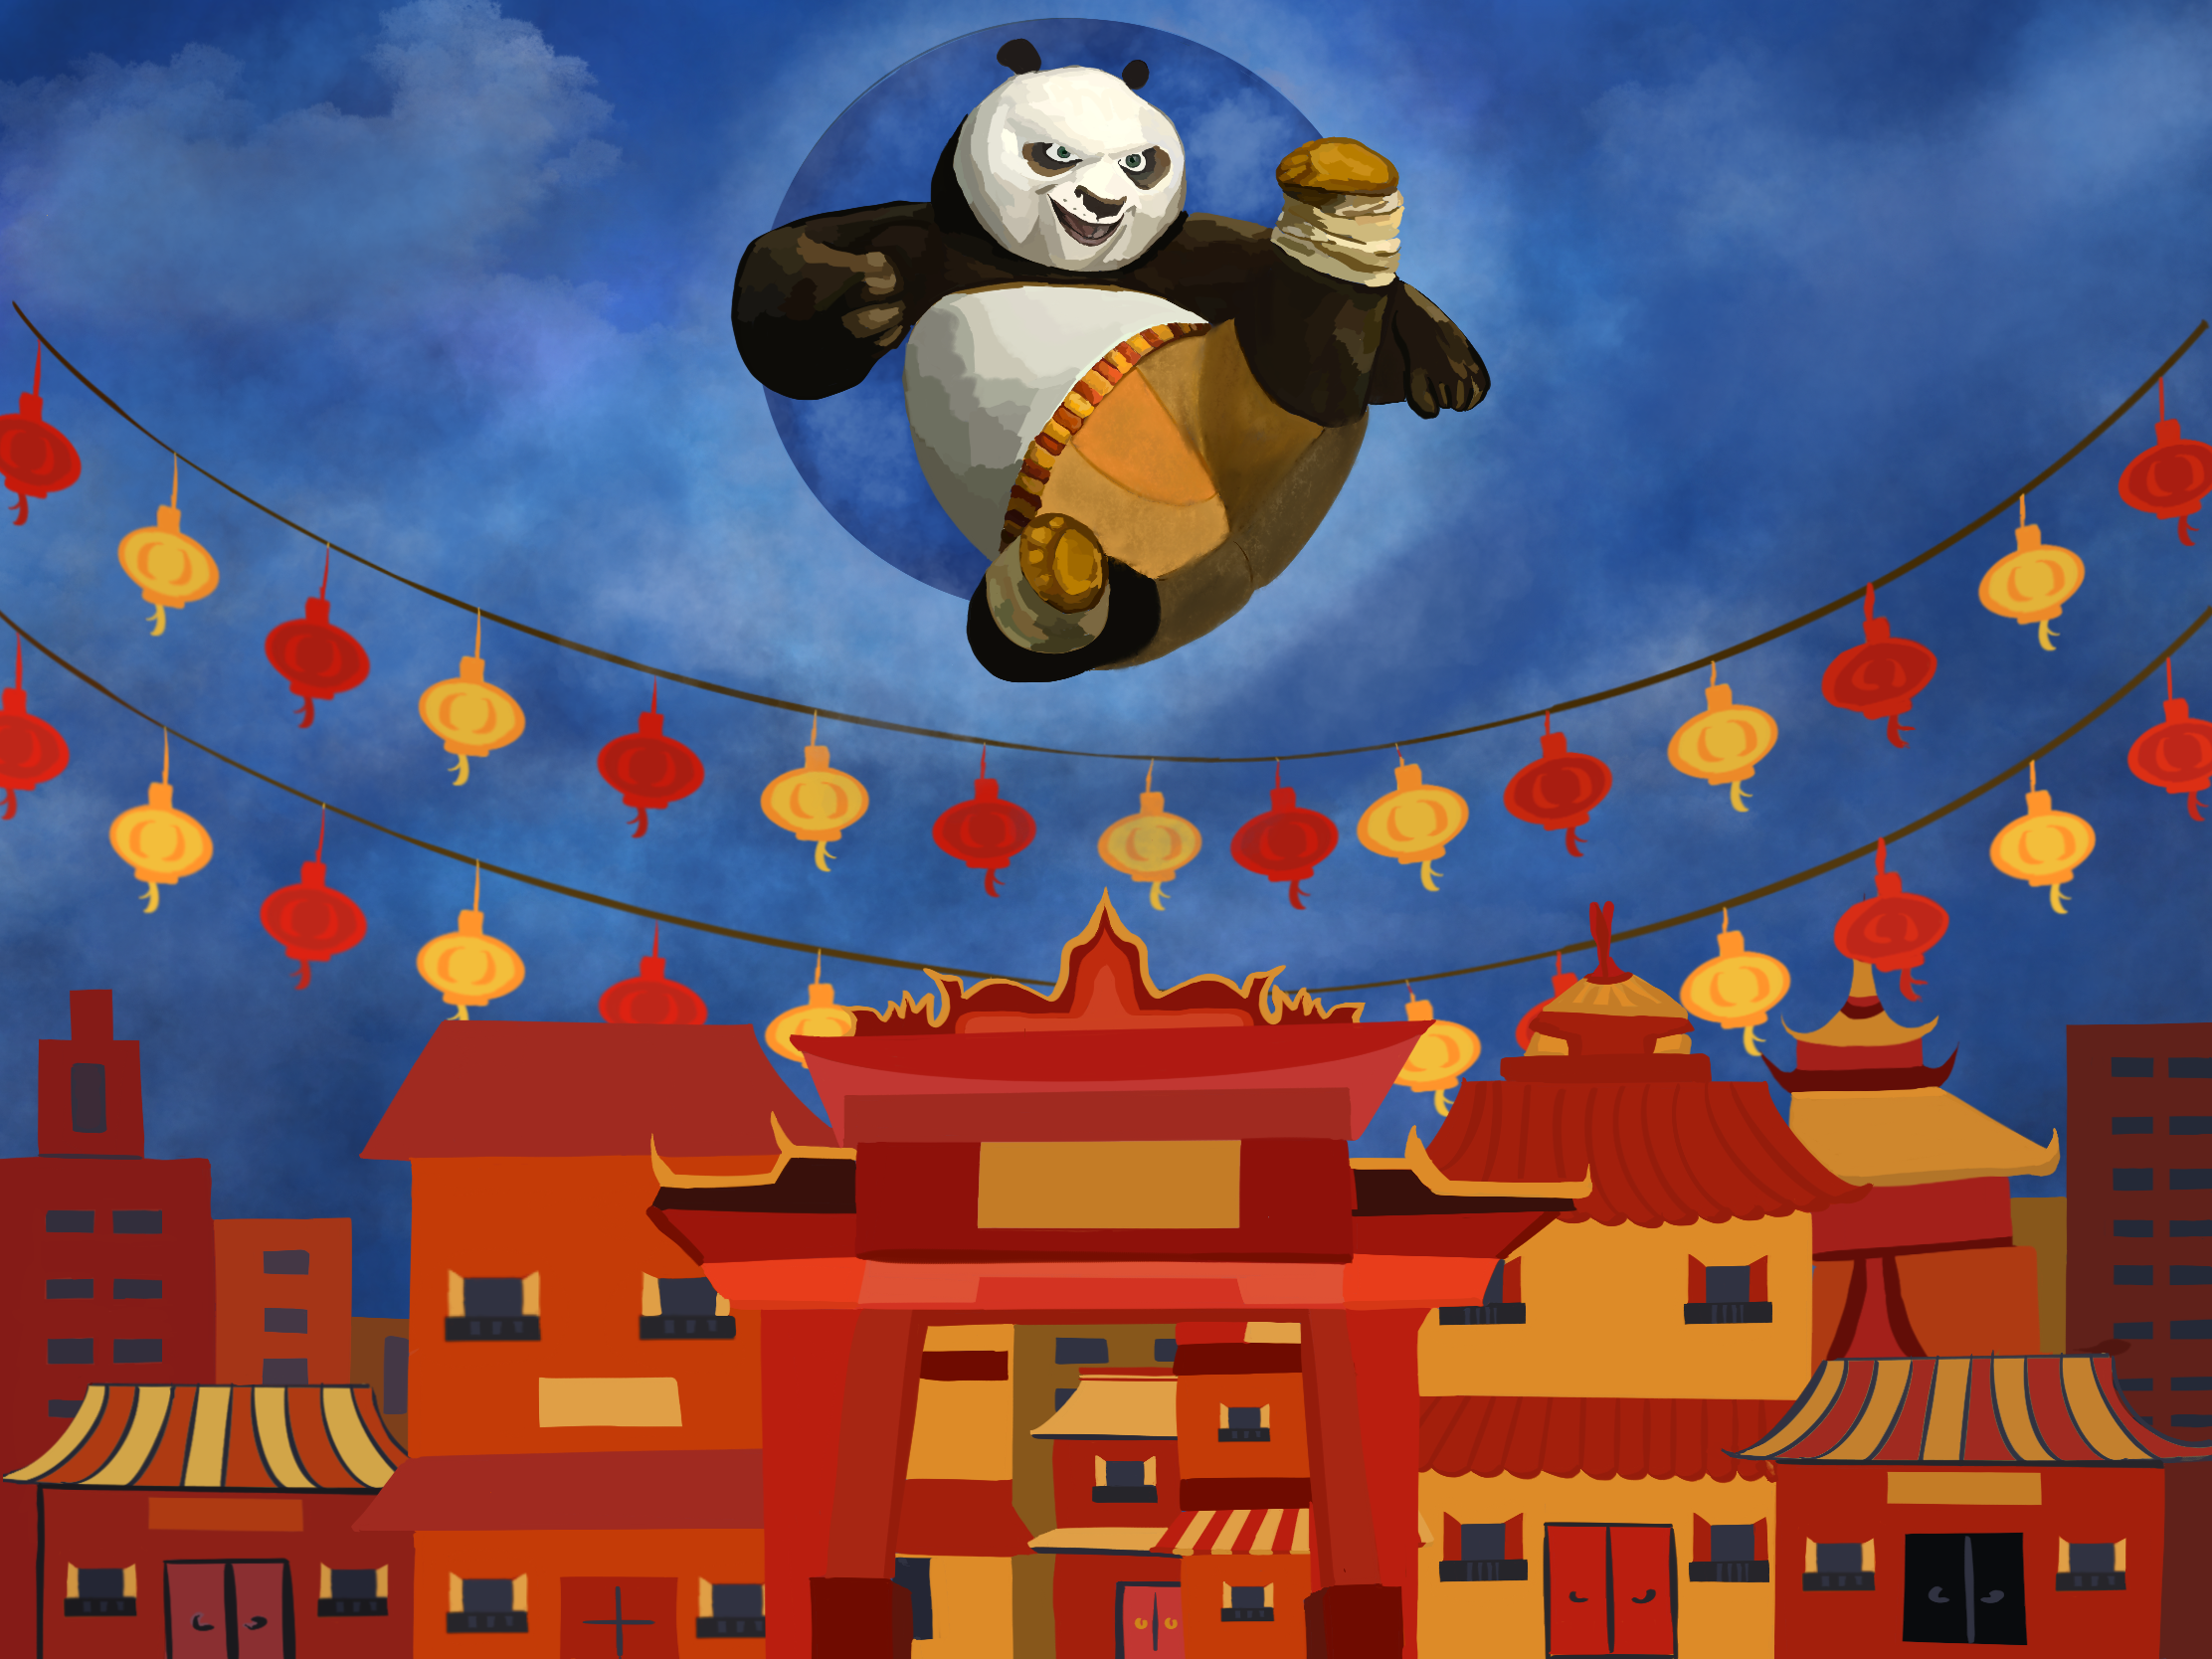 Animated: 'Kung Fu Panda' kicks Chinese culture into action